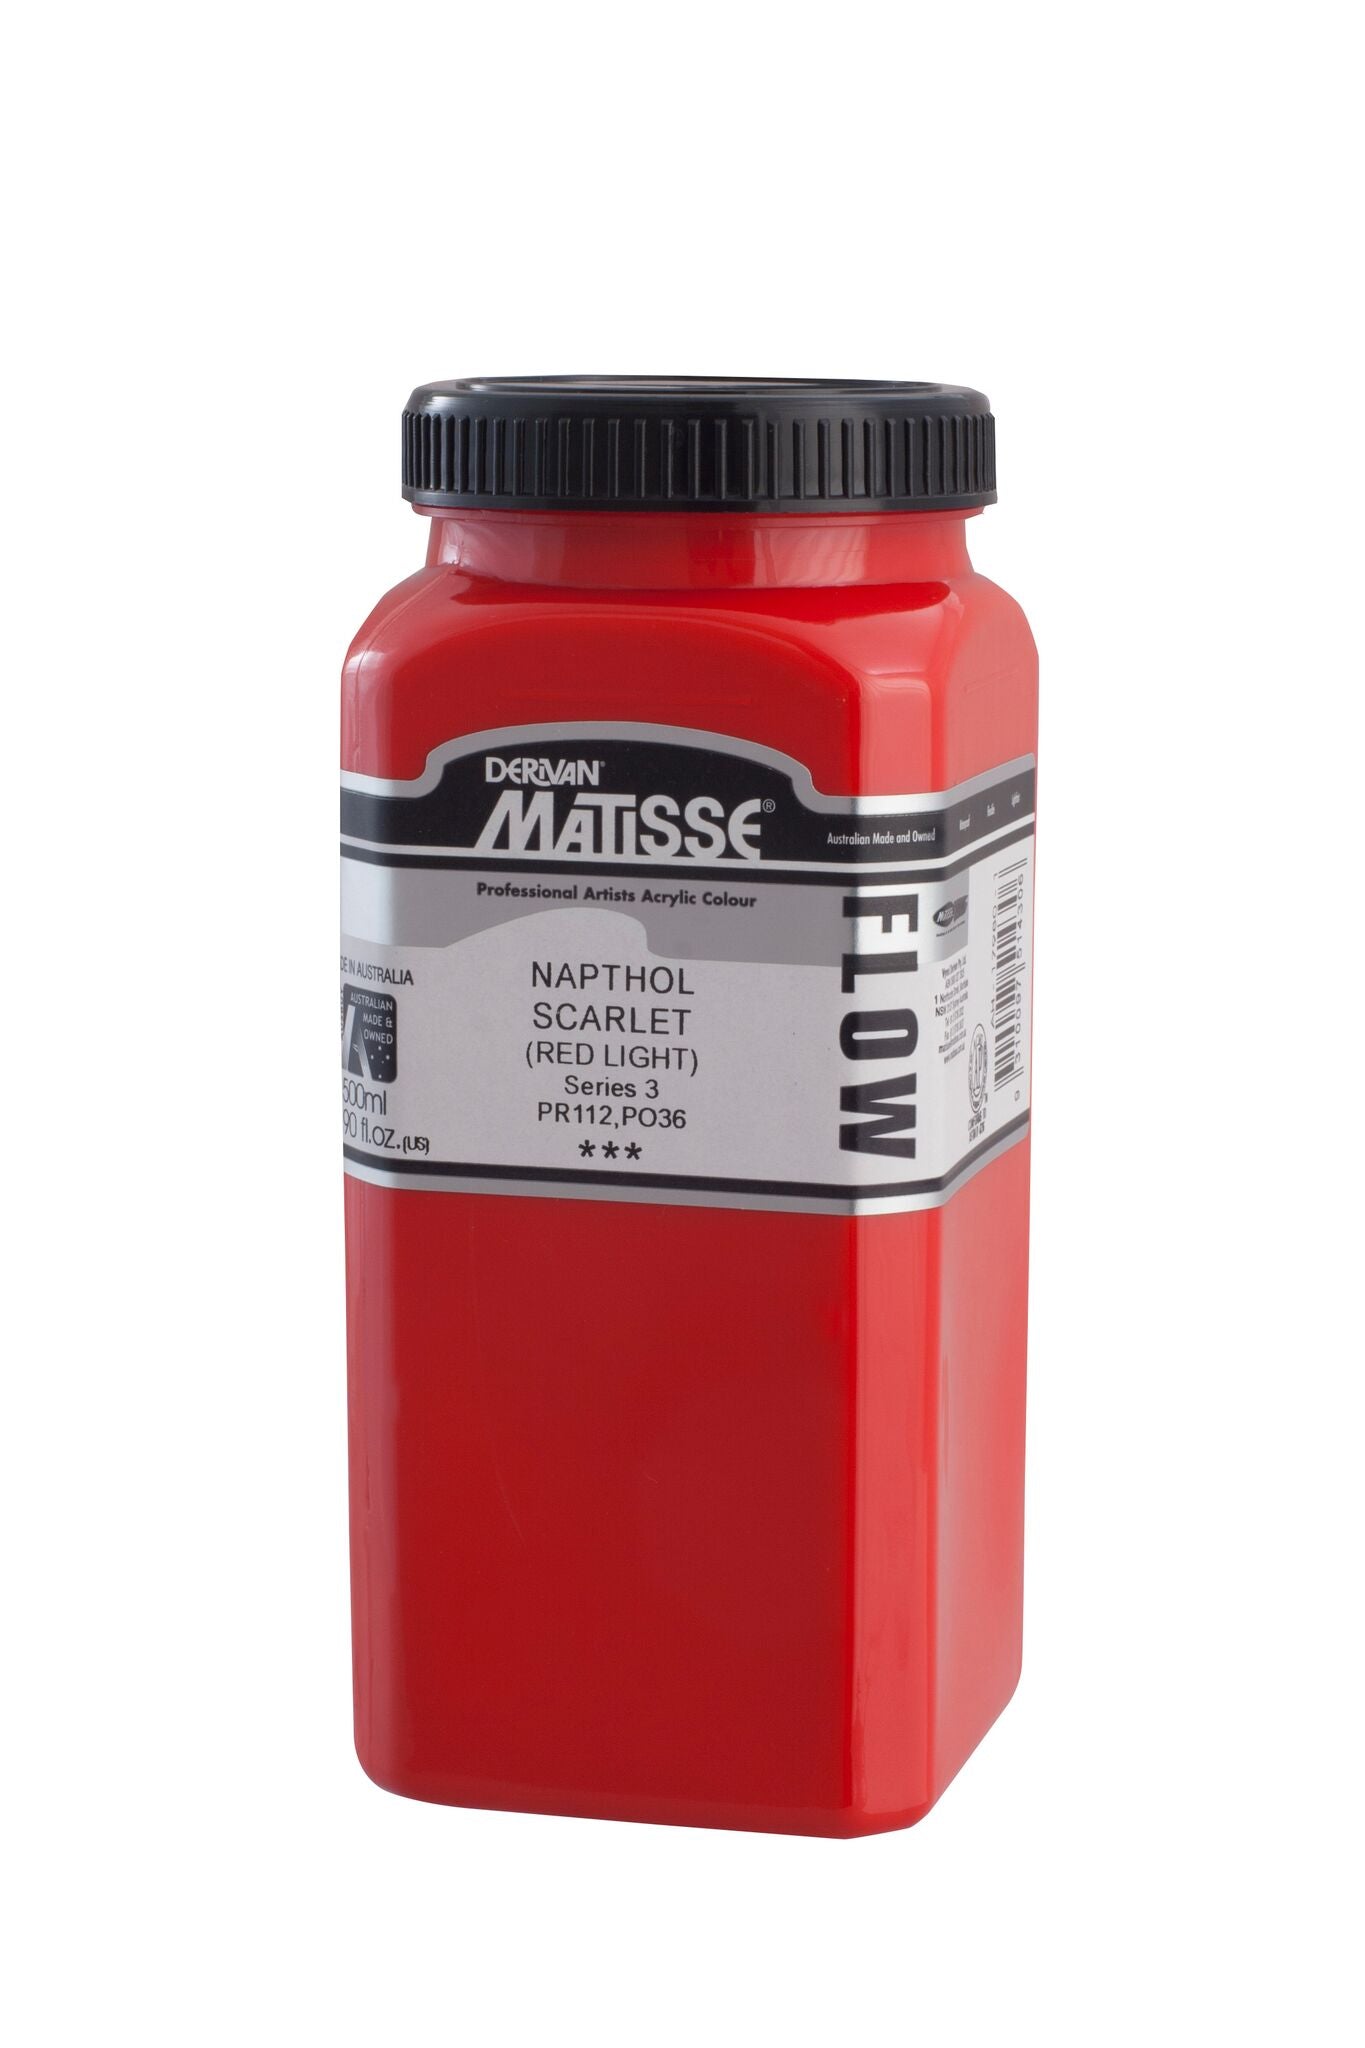 Matisse Flow 500ml Napthol Scarlet - theartshop.com.au